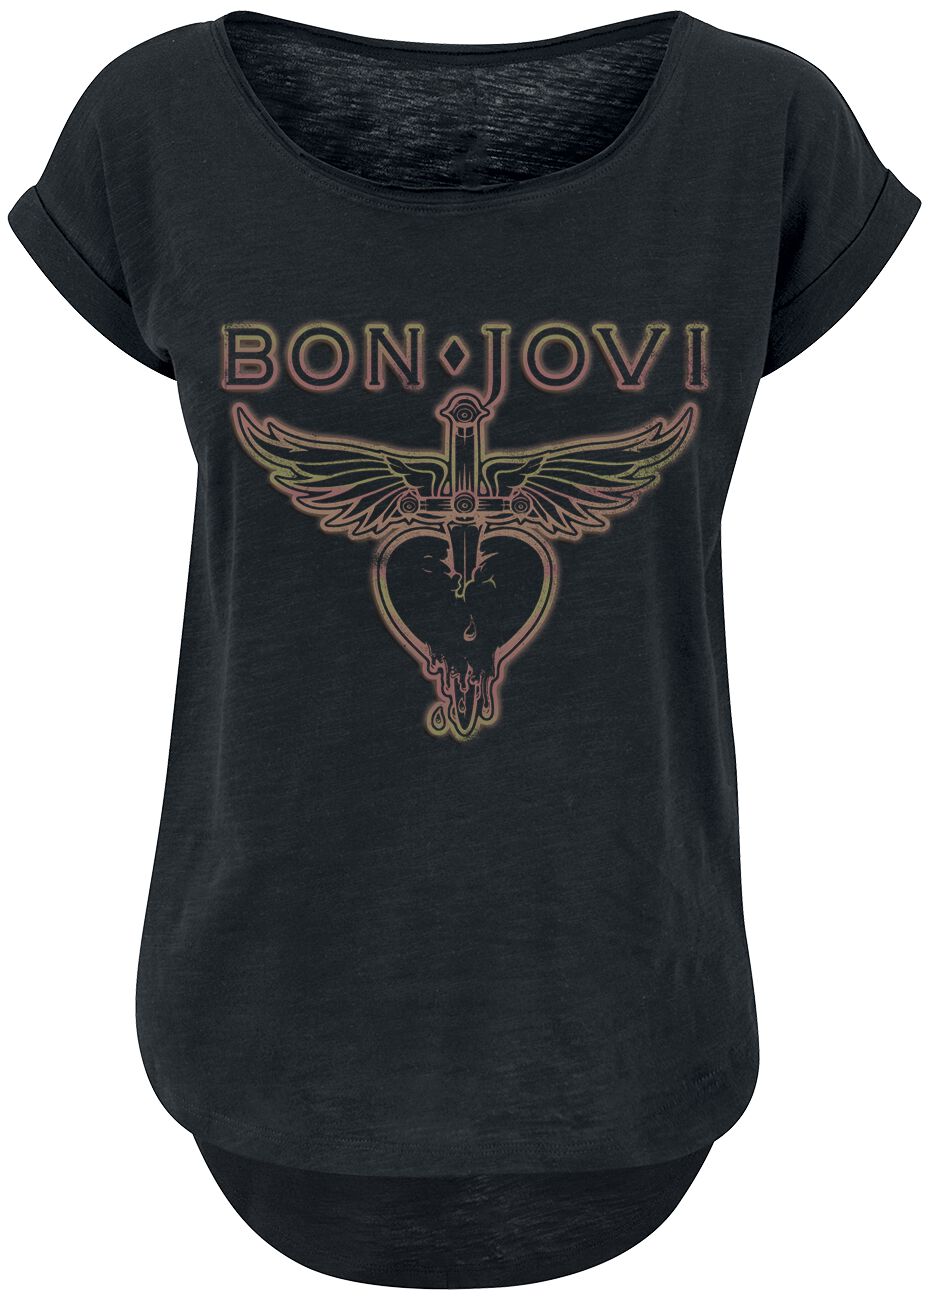 bon jovi t-shirt - heart & dagger outline - s bis 3xl - fÃ¼r damen - grÃ¶ÃŸe xxl - - lizenziertes merchandise! schwarz donna